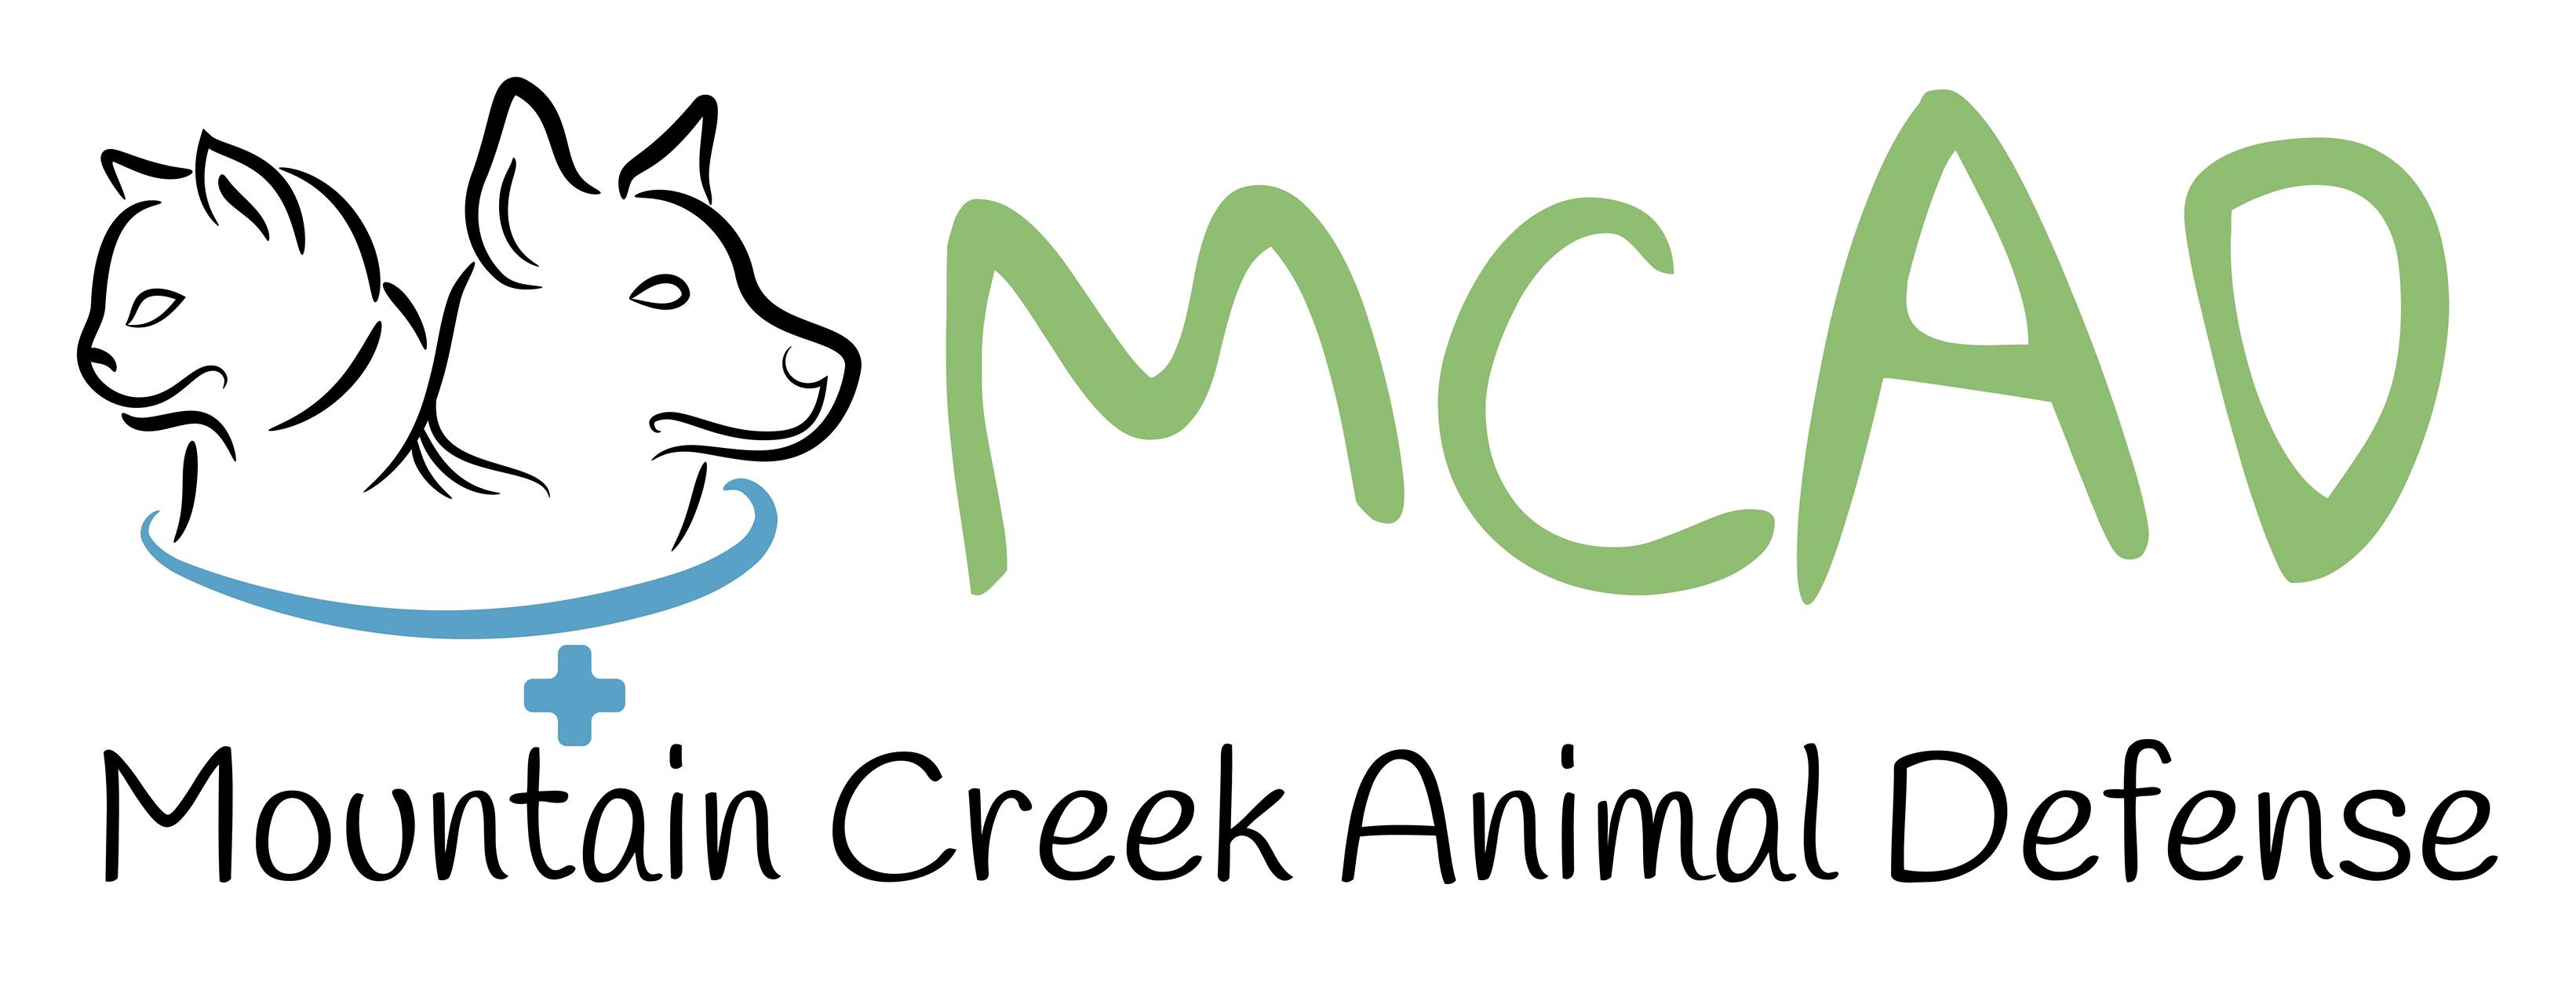 Mountain Creek Animal Defense